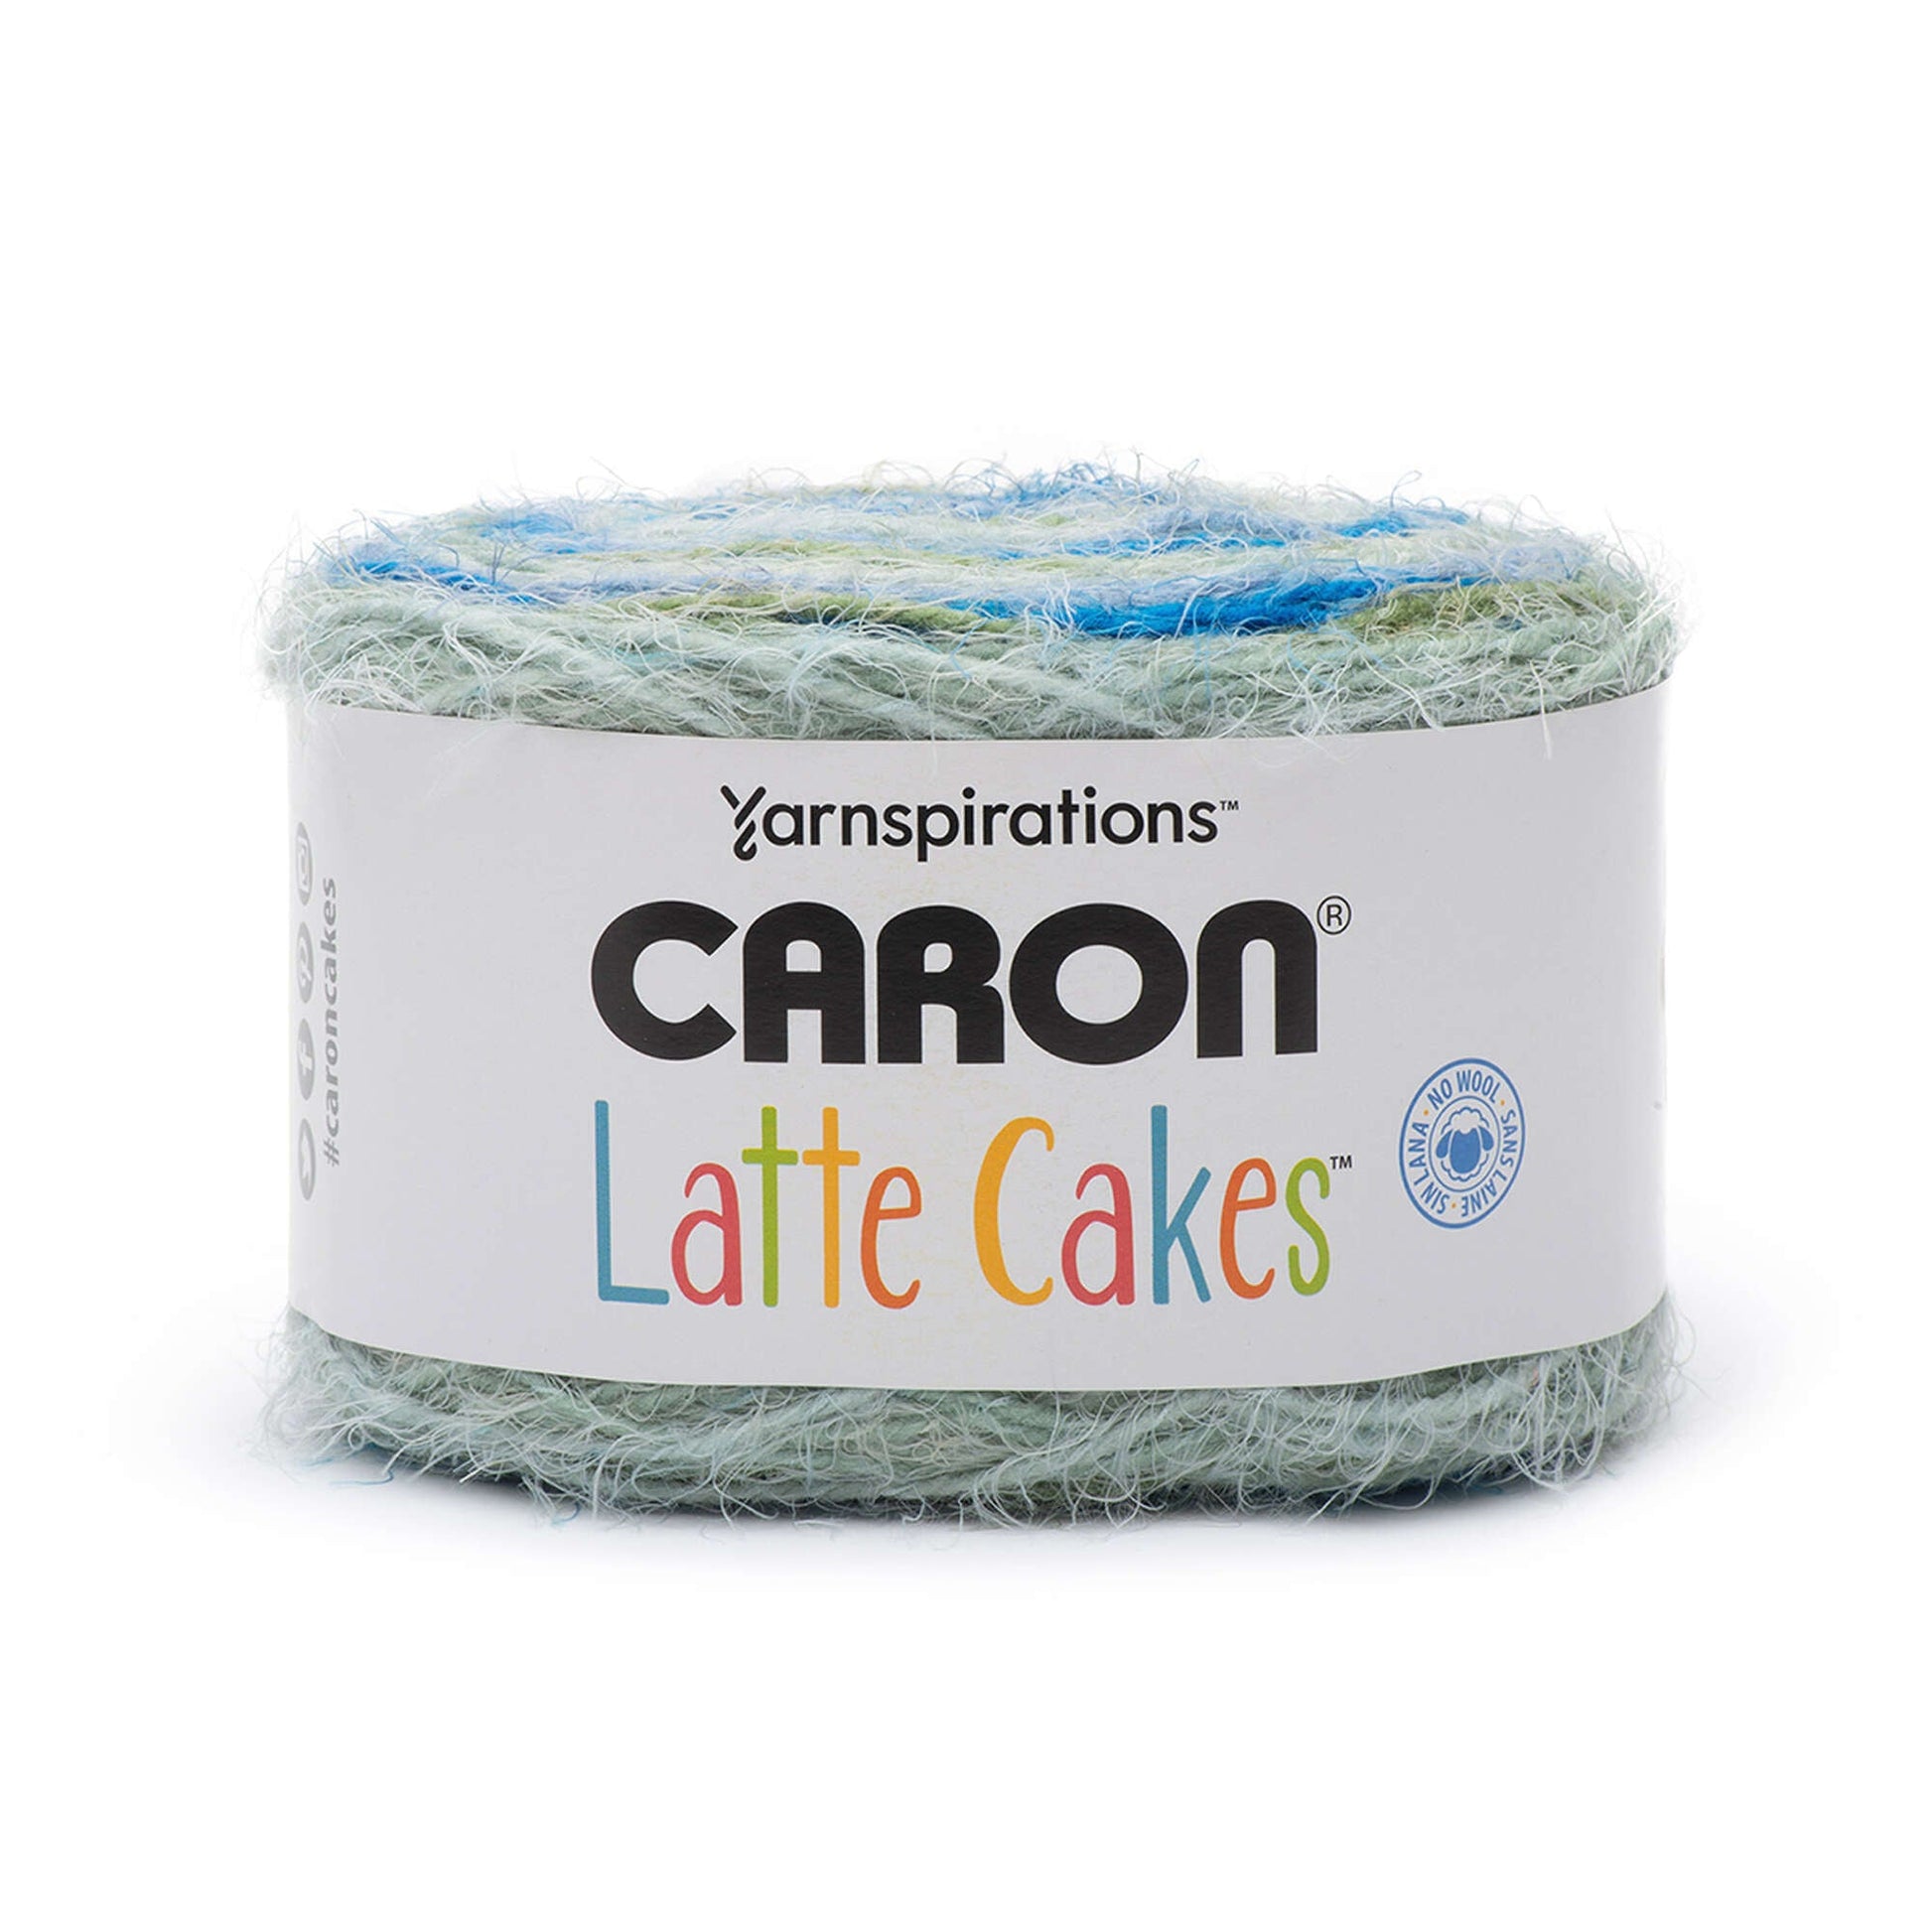  Caron Latte Cakes, Earl Grey, 250g